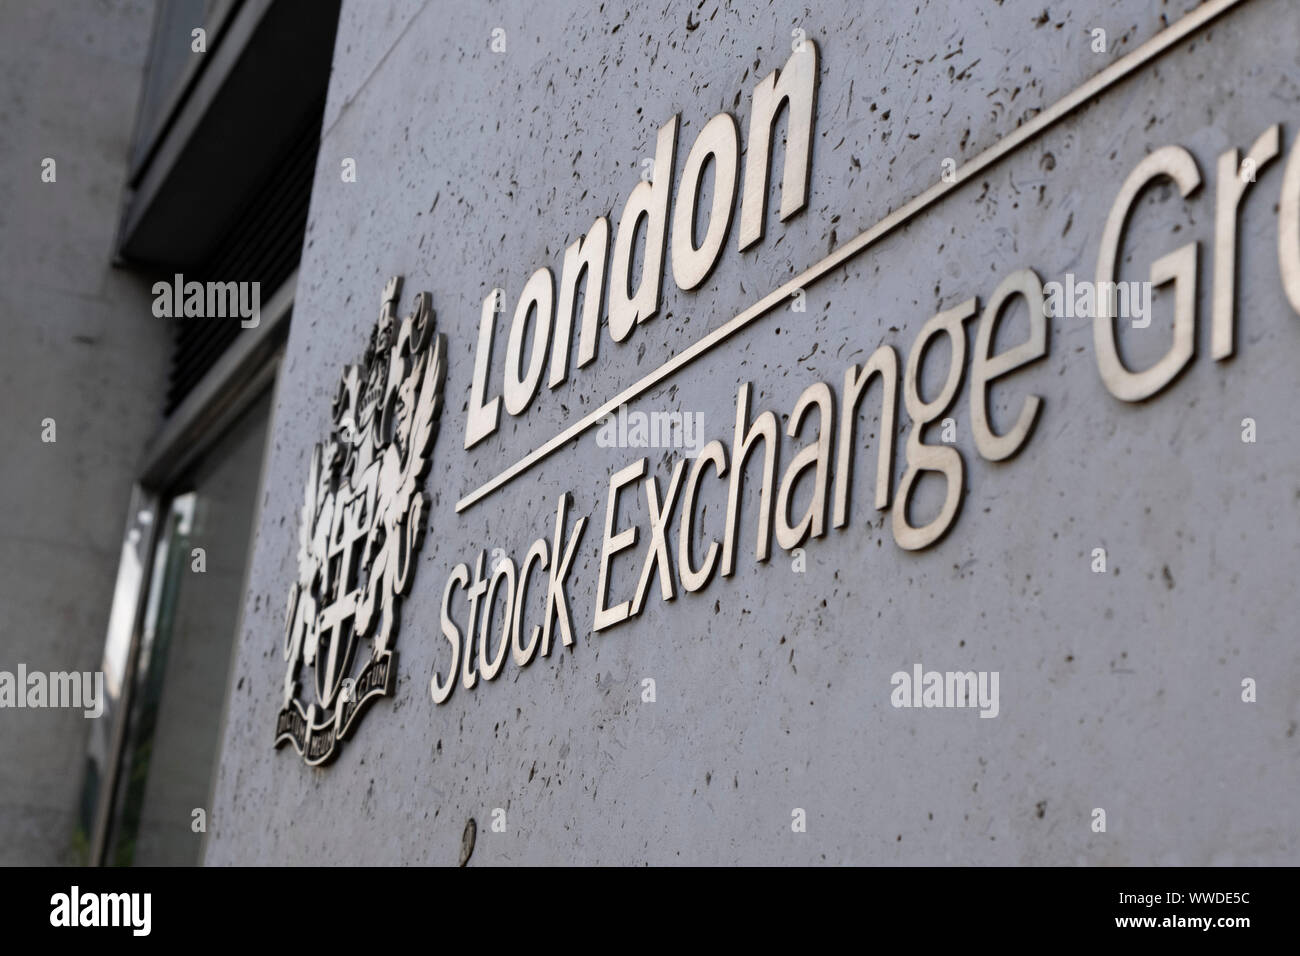 Inside the London Stock Exchange Stock Photo - Alamy